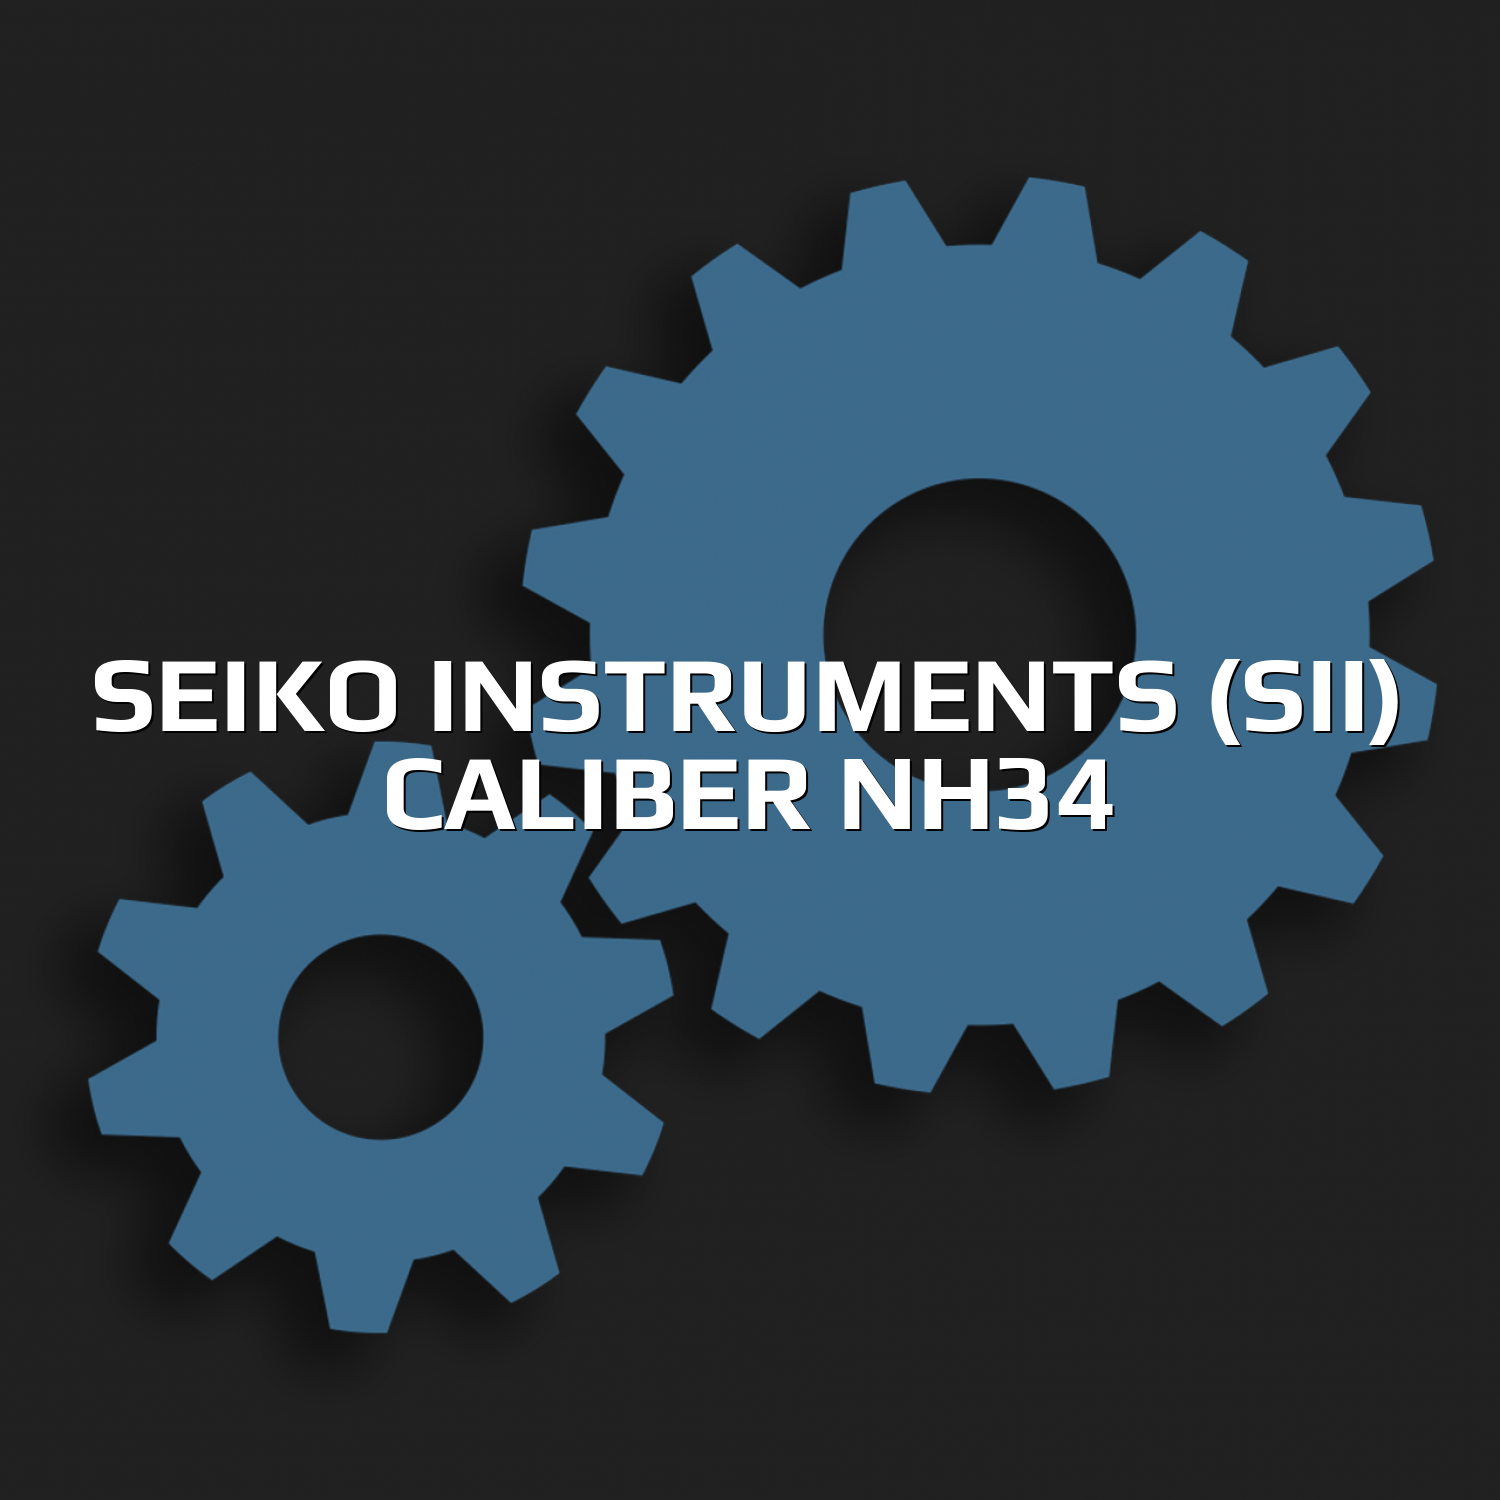 Seiko Instruments (SII) Caliber NH34